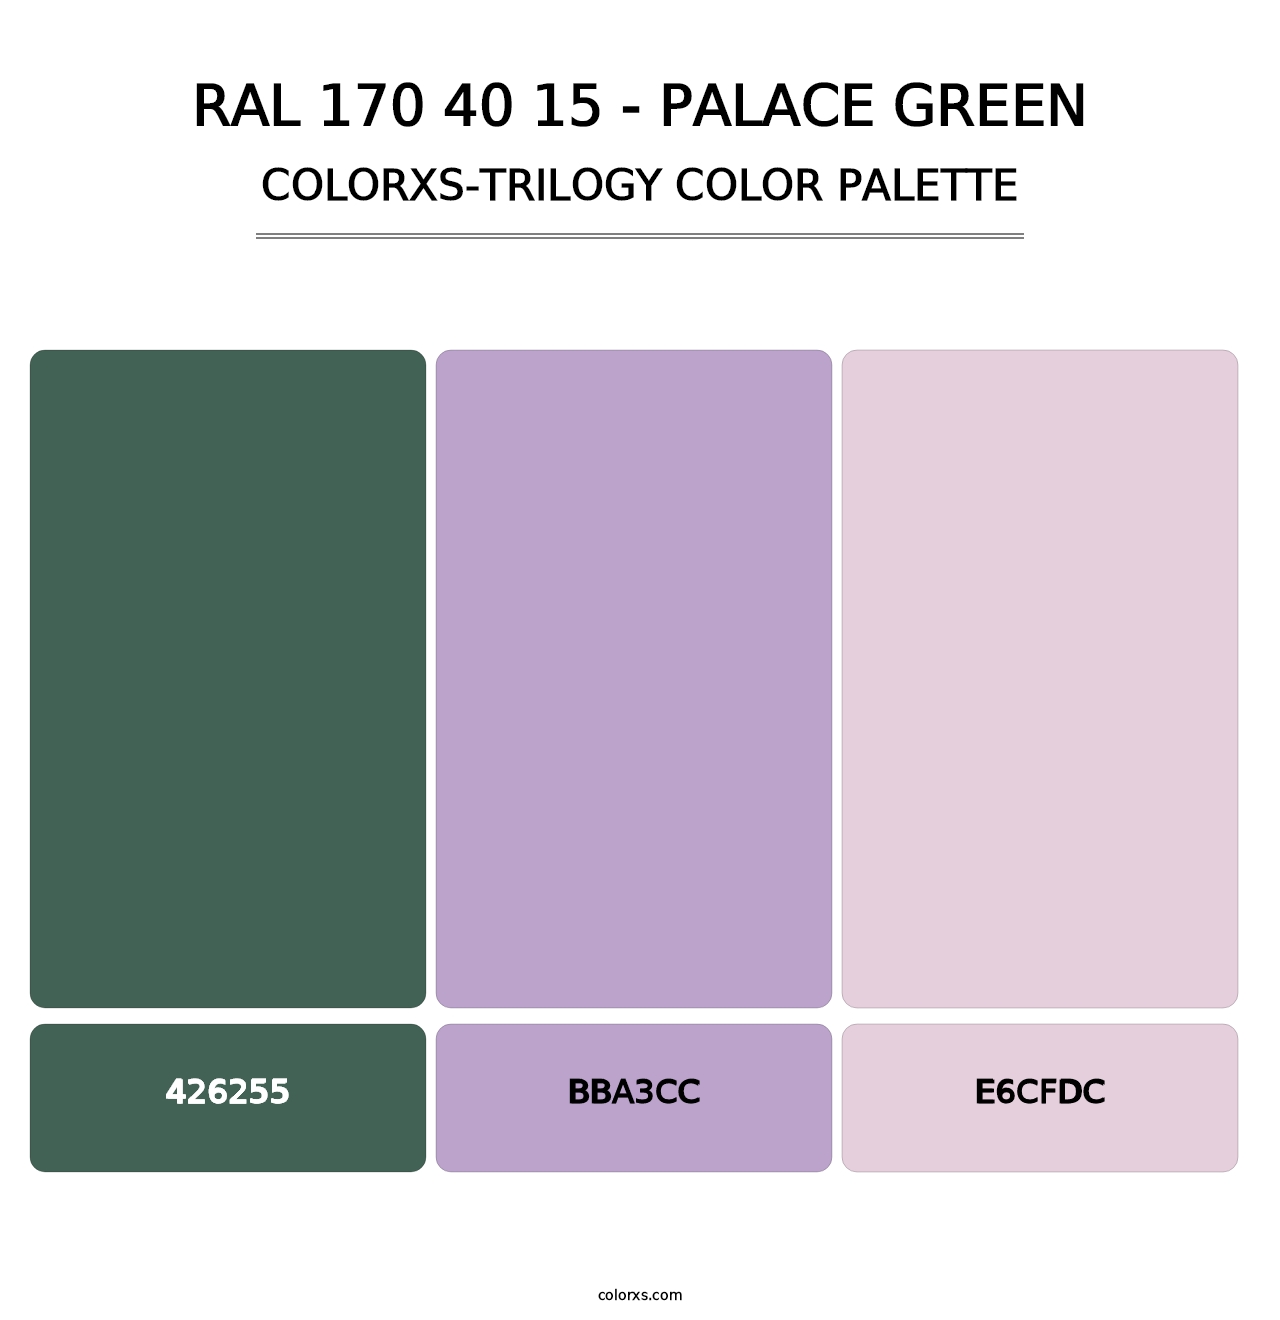 RAL 170 40 15 - Palace Green - Colorxs Trilogy Palette